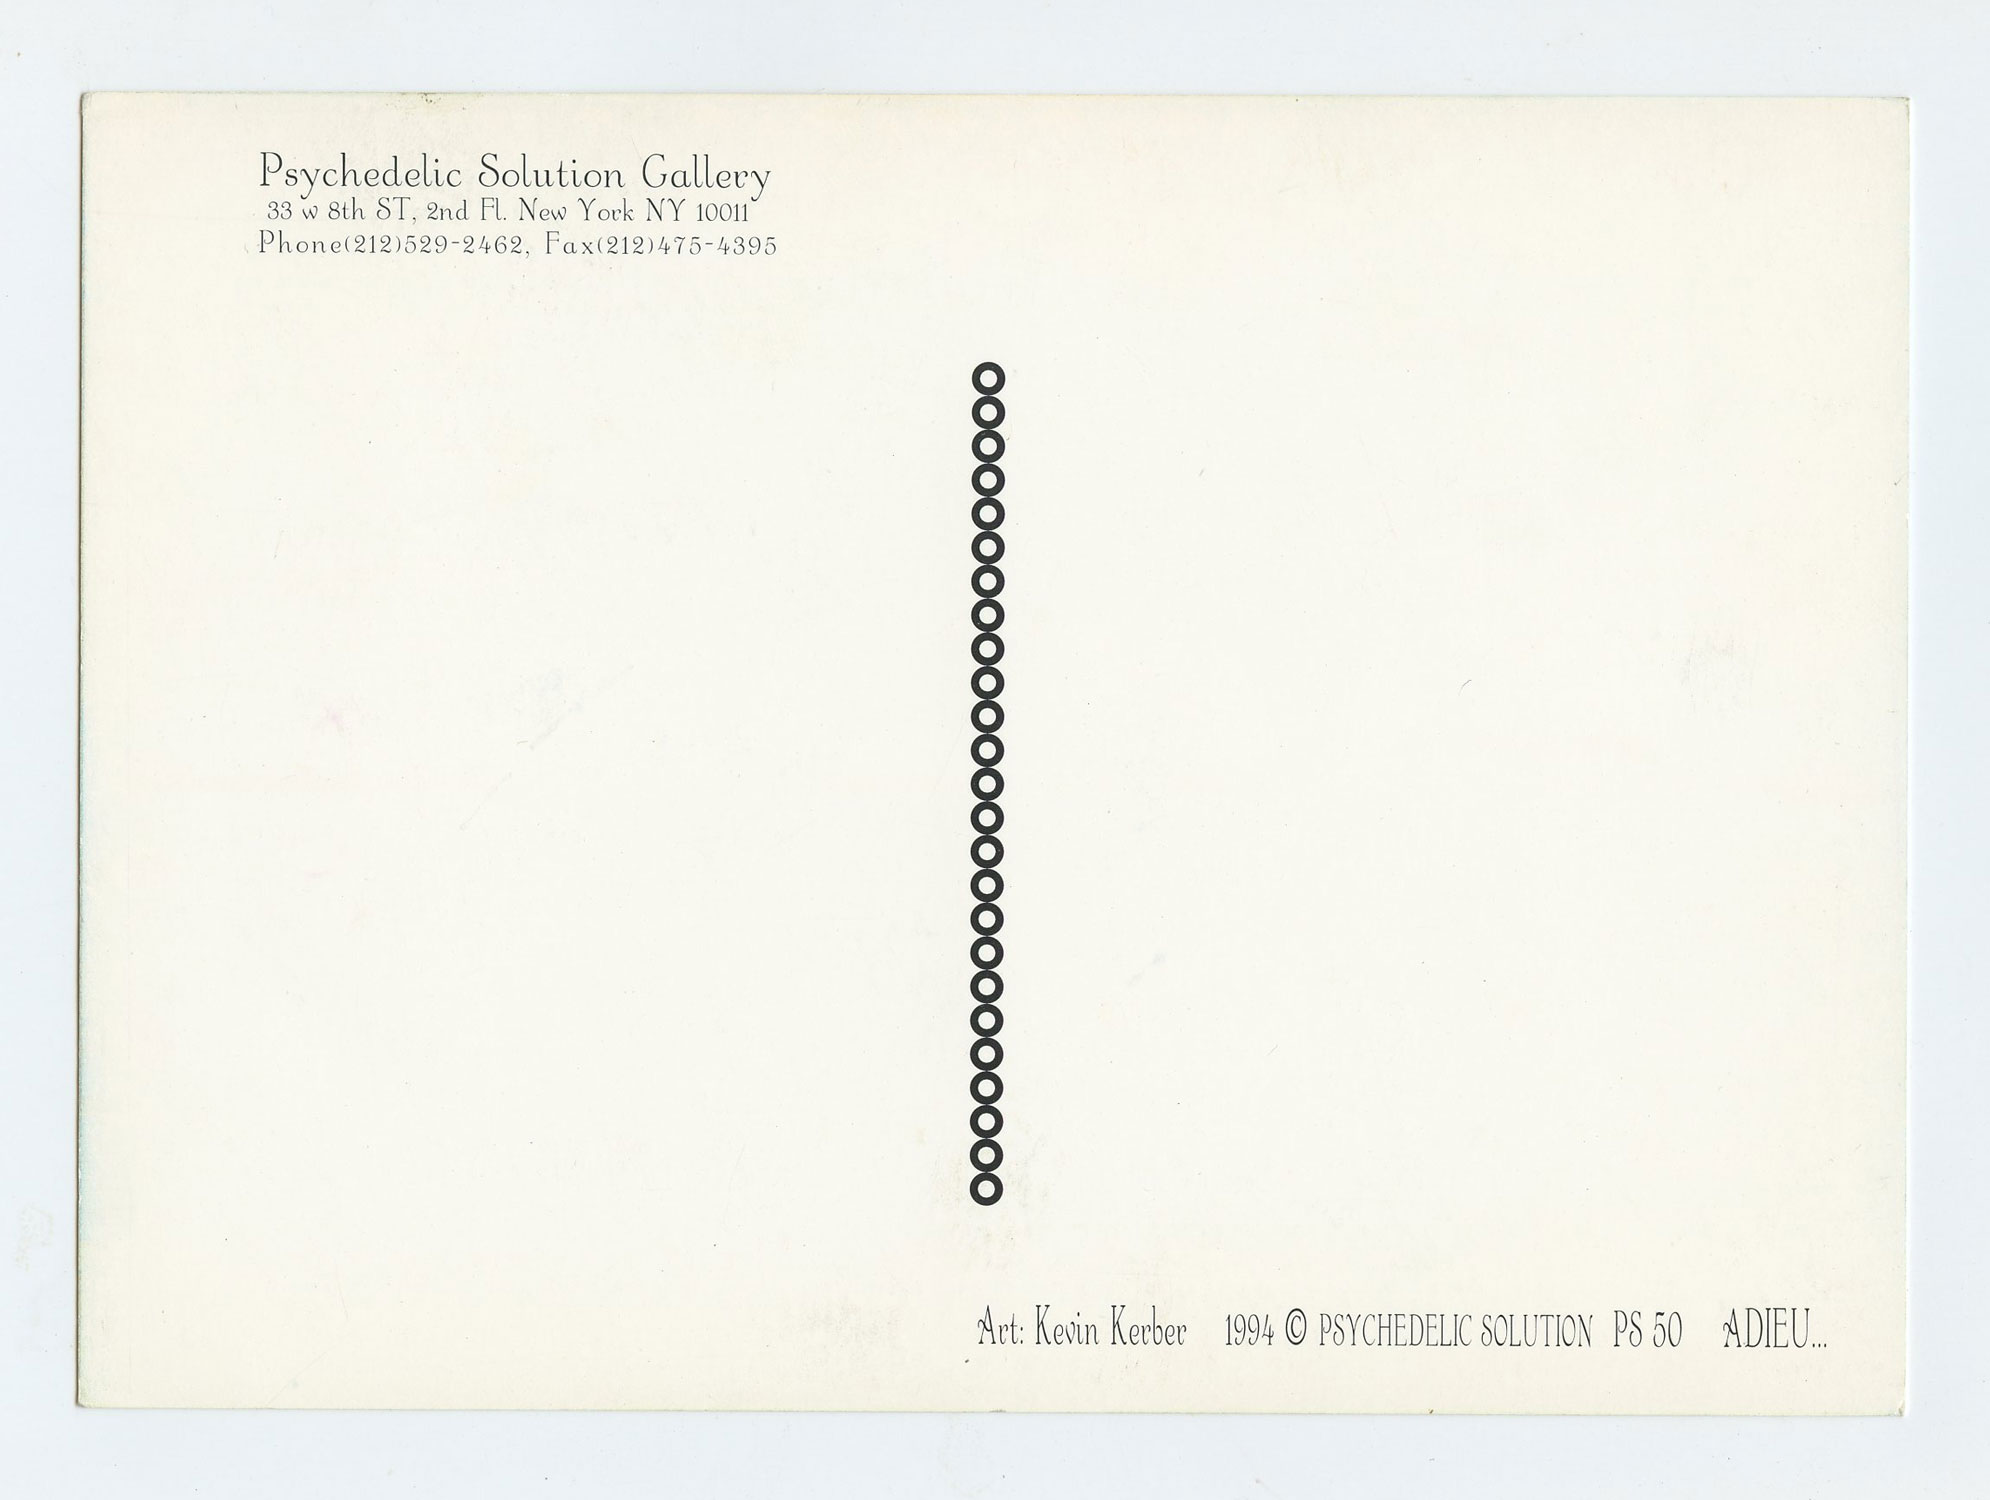 Kevin Kerber Postcard ADIEU 1994 Psychedelic Solution